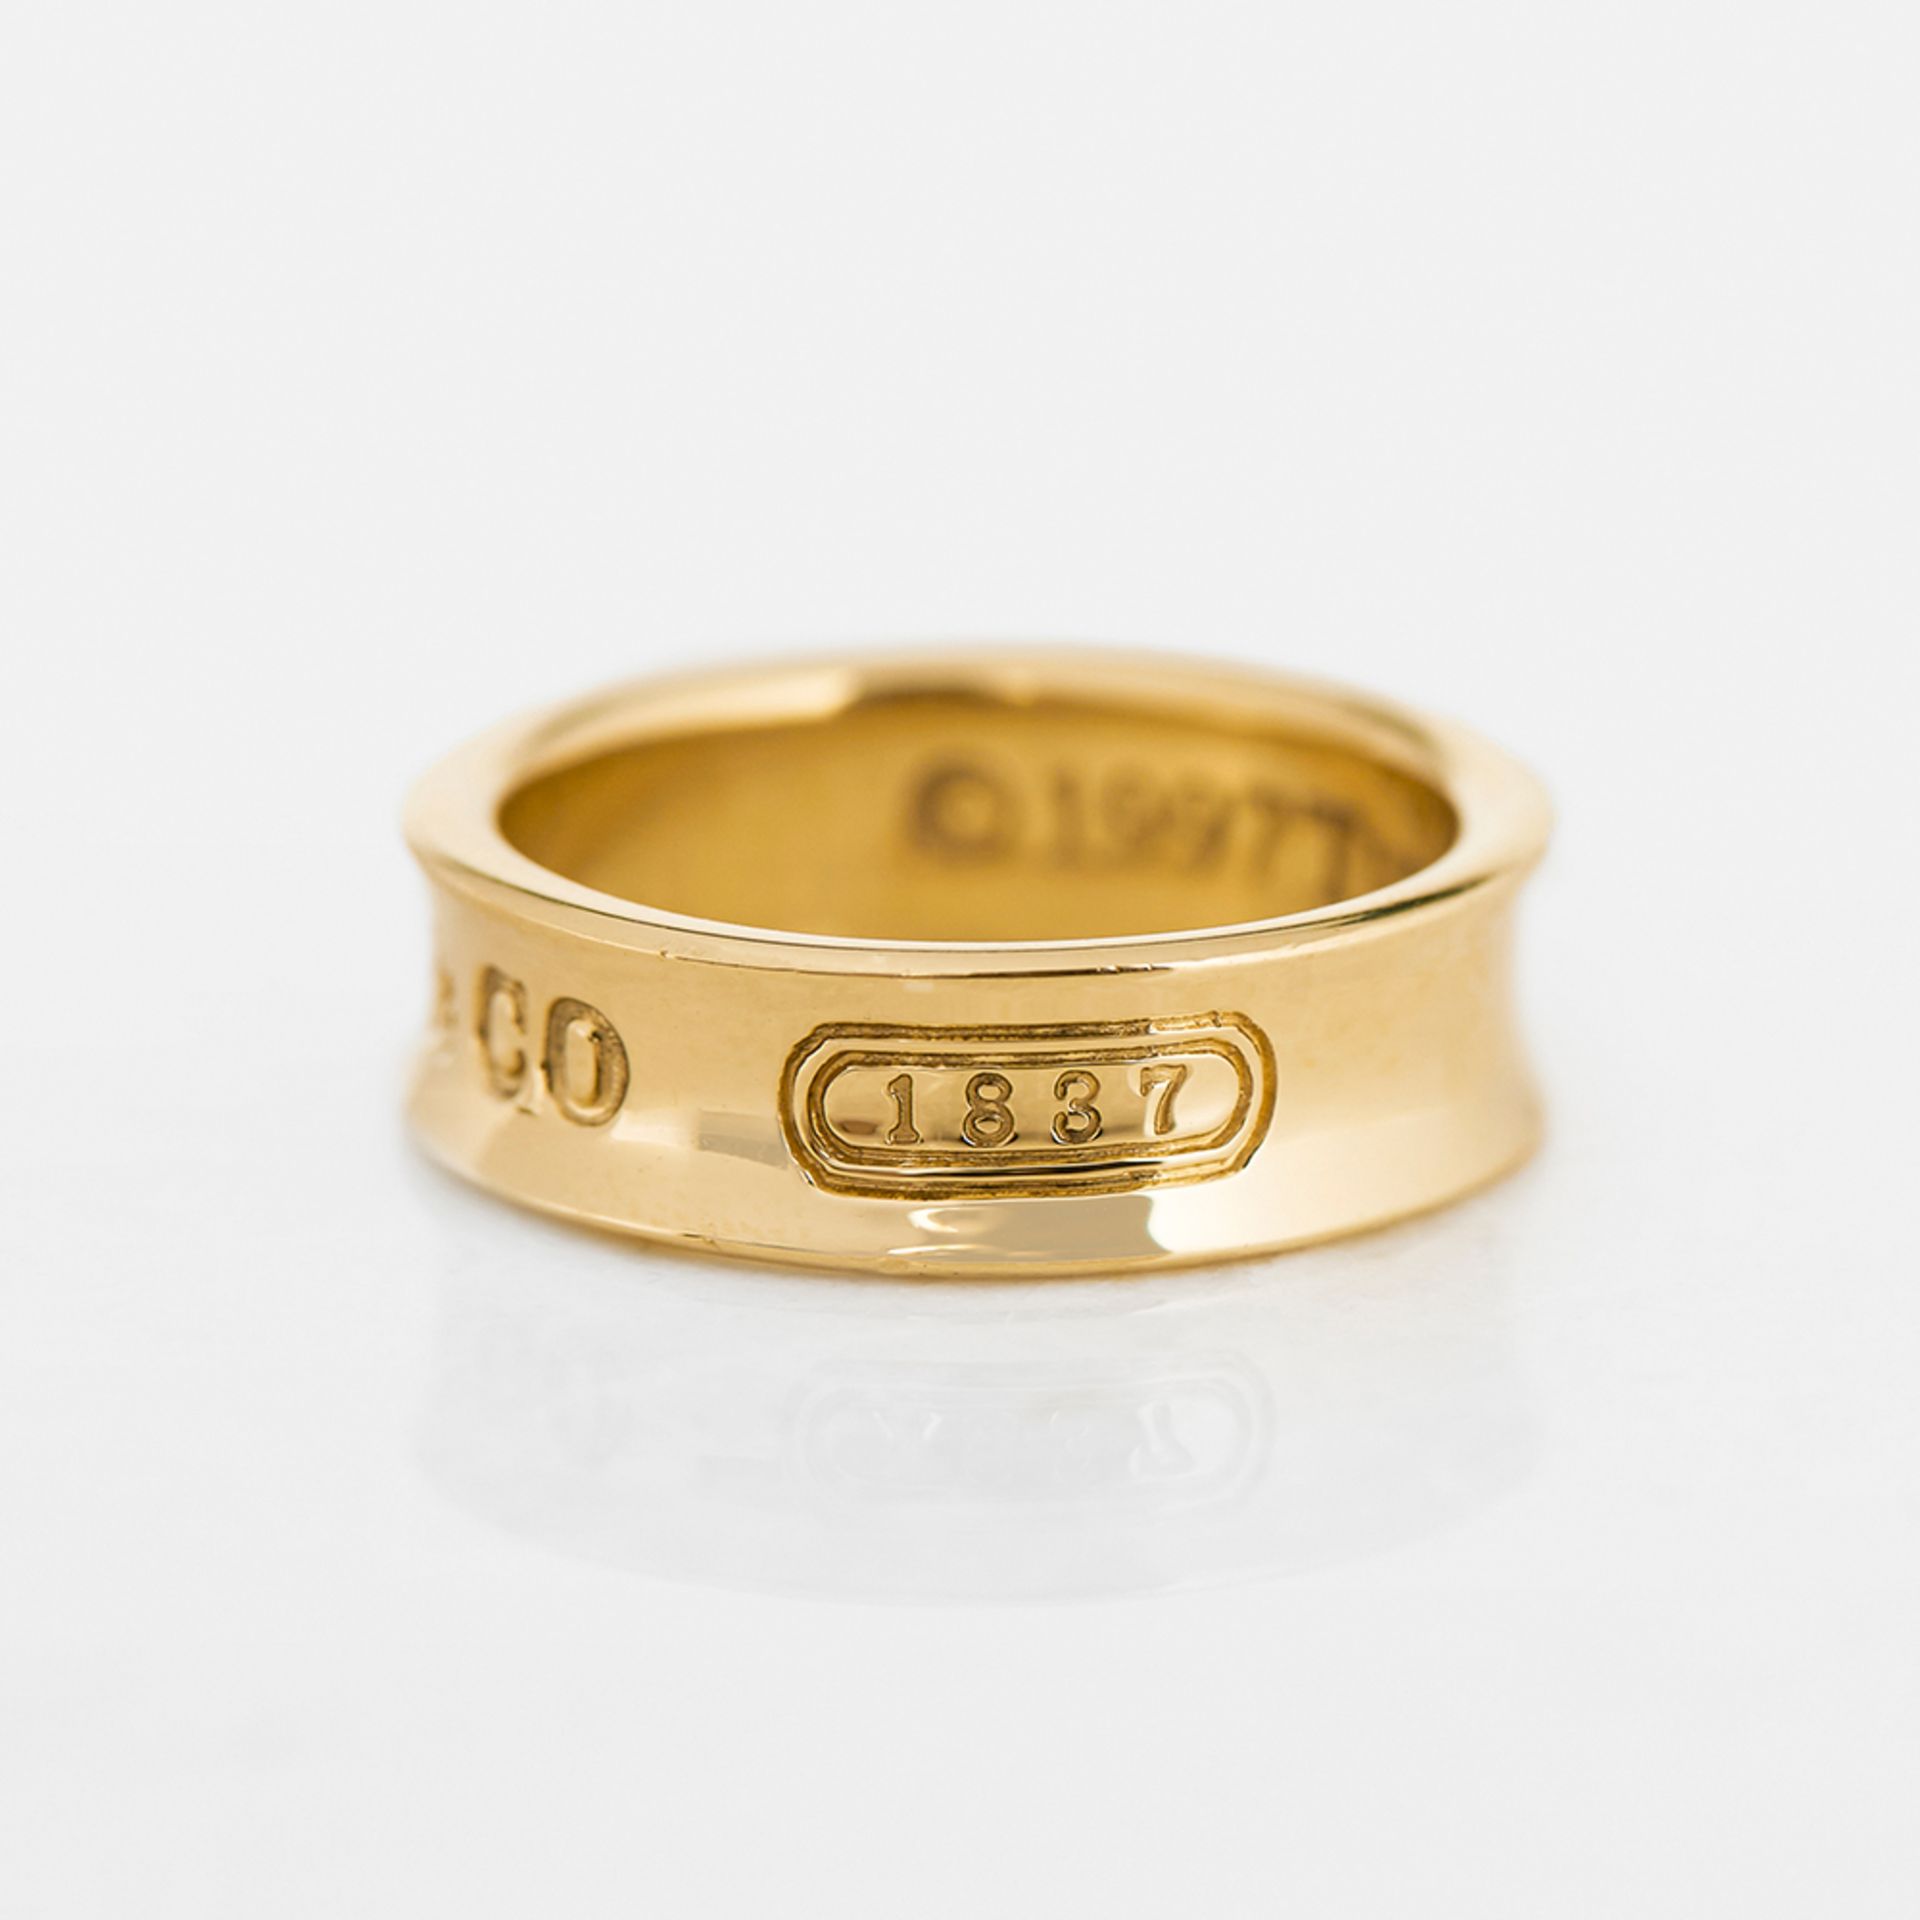 Tiffany & Co. 18k Yellow Gold Tiffany 1837 Ring - Image 4 of 8